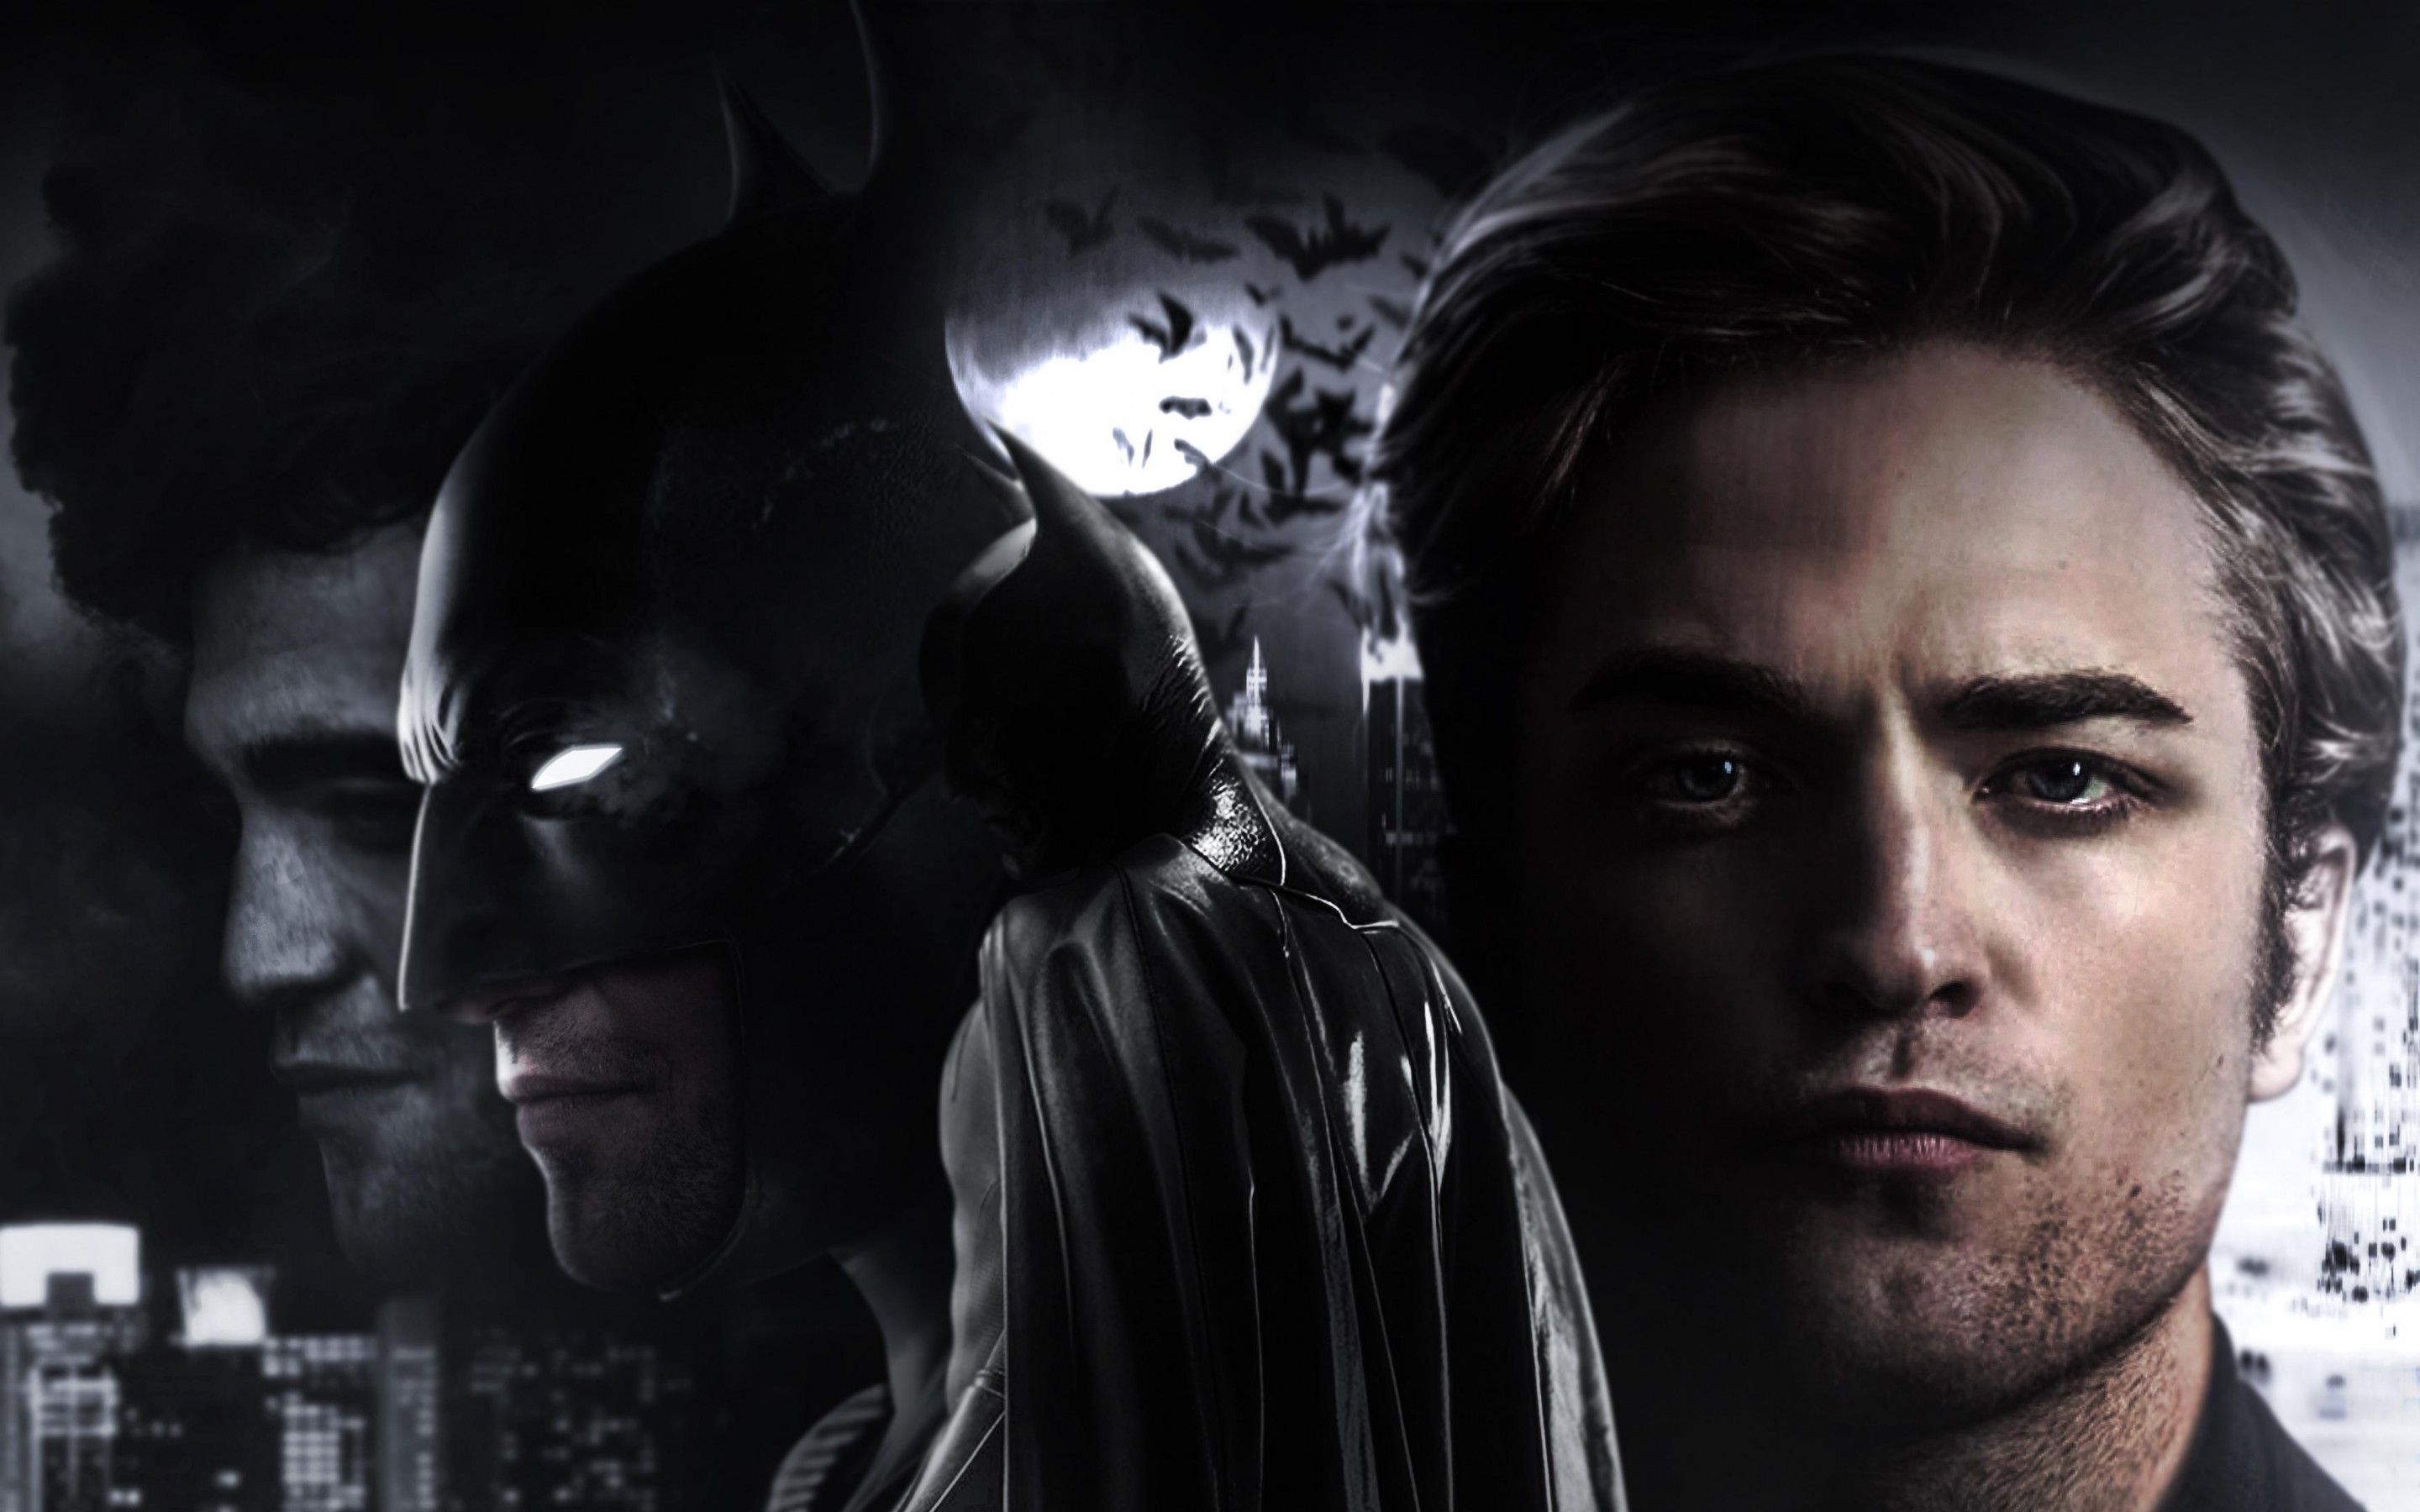 The Batman 4K Wallpaper, Robert Pattinson, 2021 Movies, DC Comics, Movies